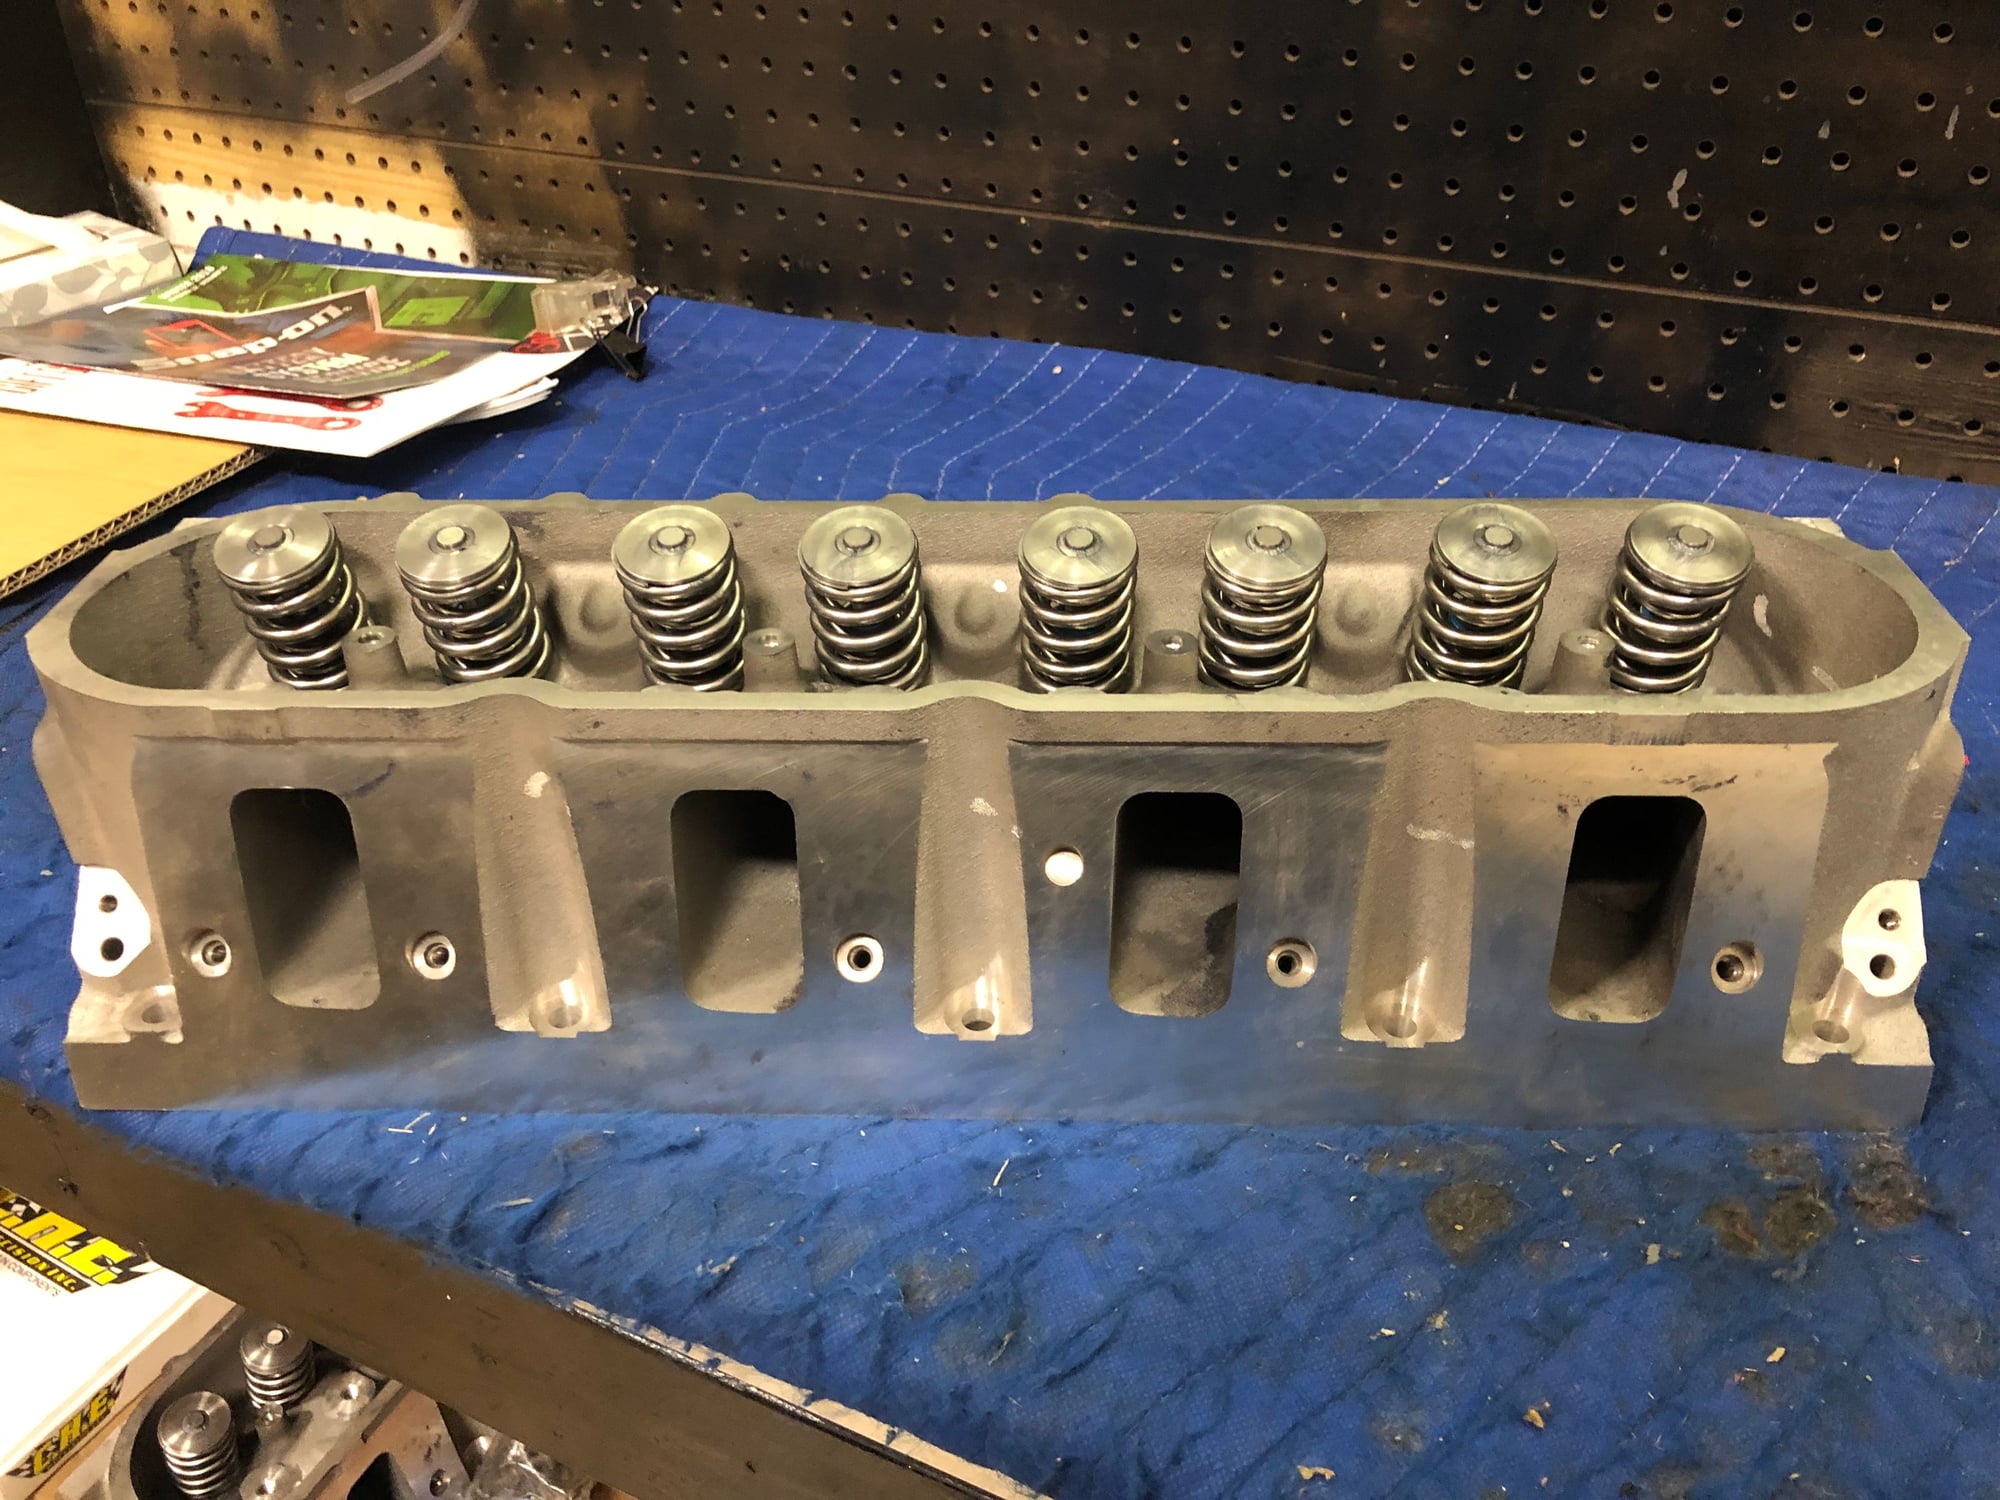 Engine - Internals - 6.0 blocks/bnib gen 4 Rods pistons/ls3 heads crank - Used - Richmond, VA 23234, United States